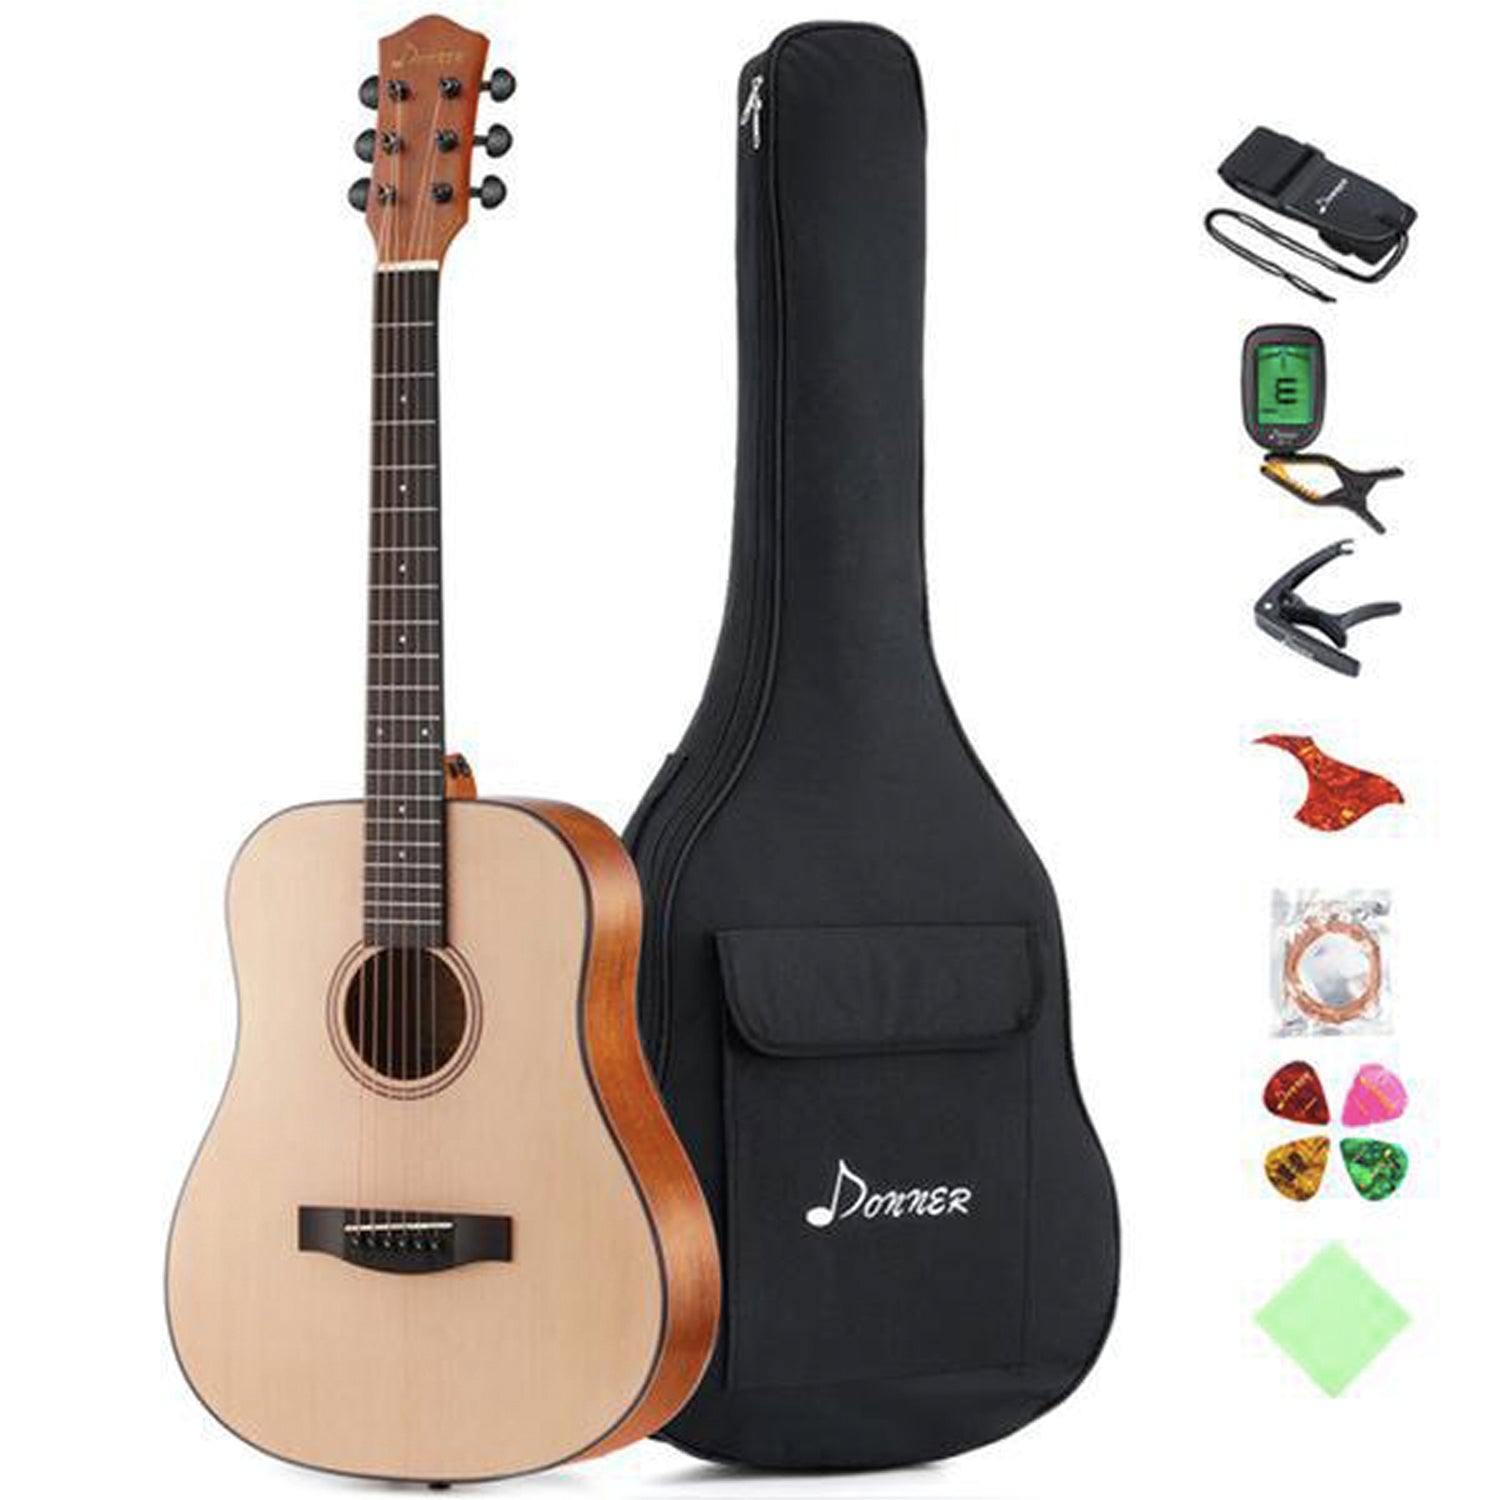 

Donner DAG-1M 3/4 Acoustic Guitar Kit 36 Inch for Travel Beginner with Steel String Spruce Wood Gig Bag Tuner Pickguard Right